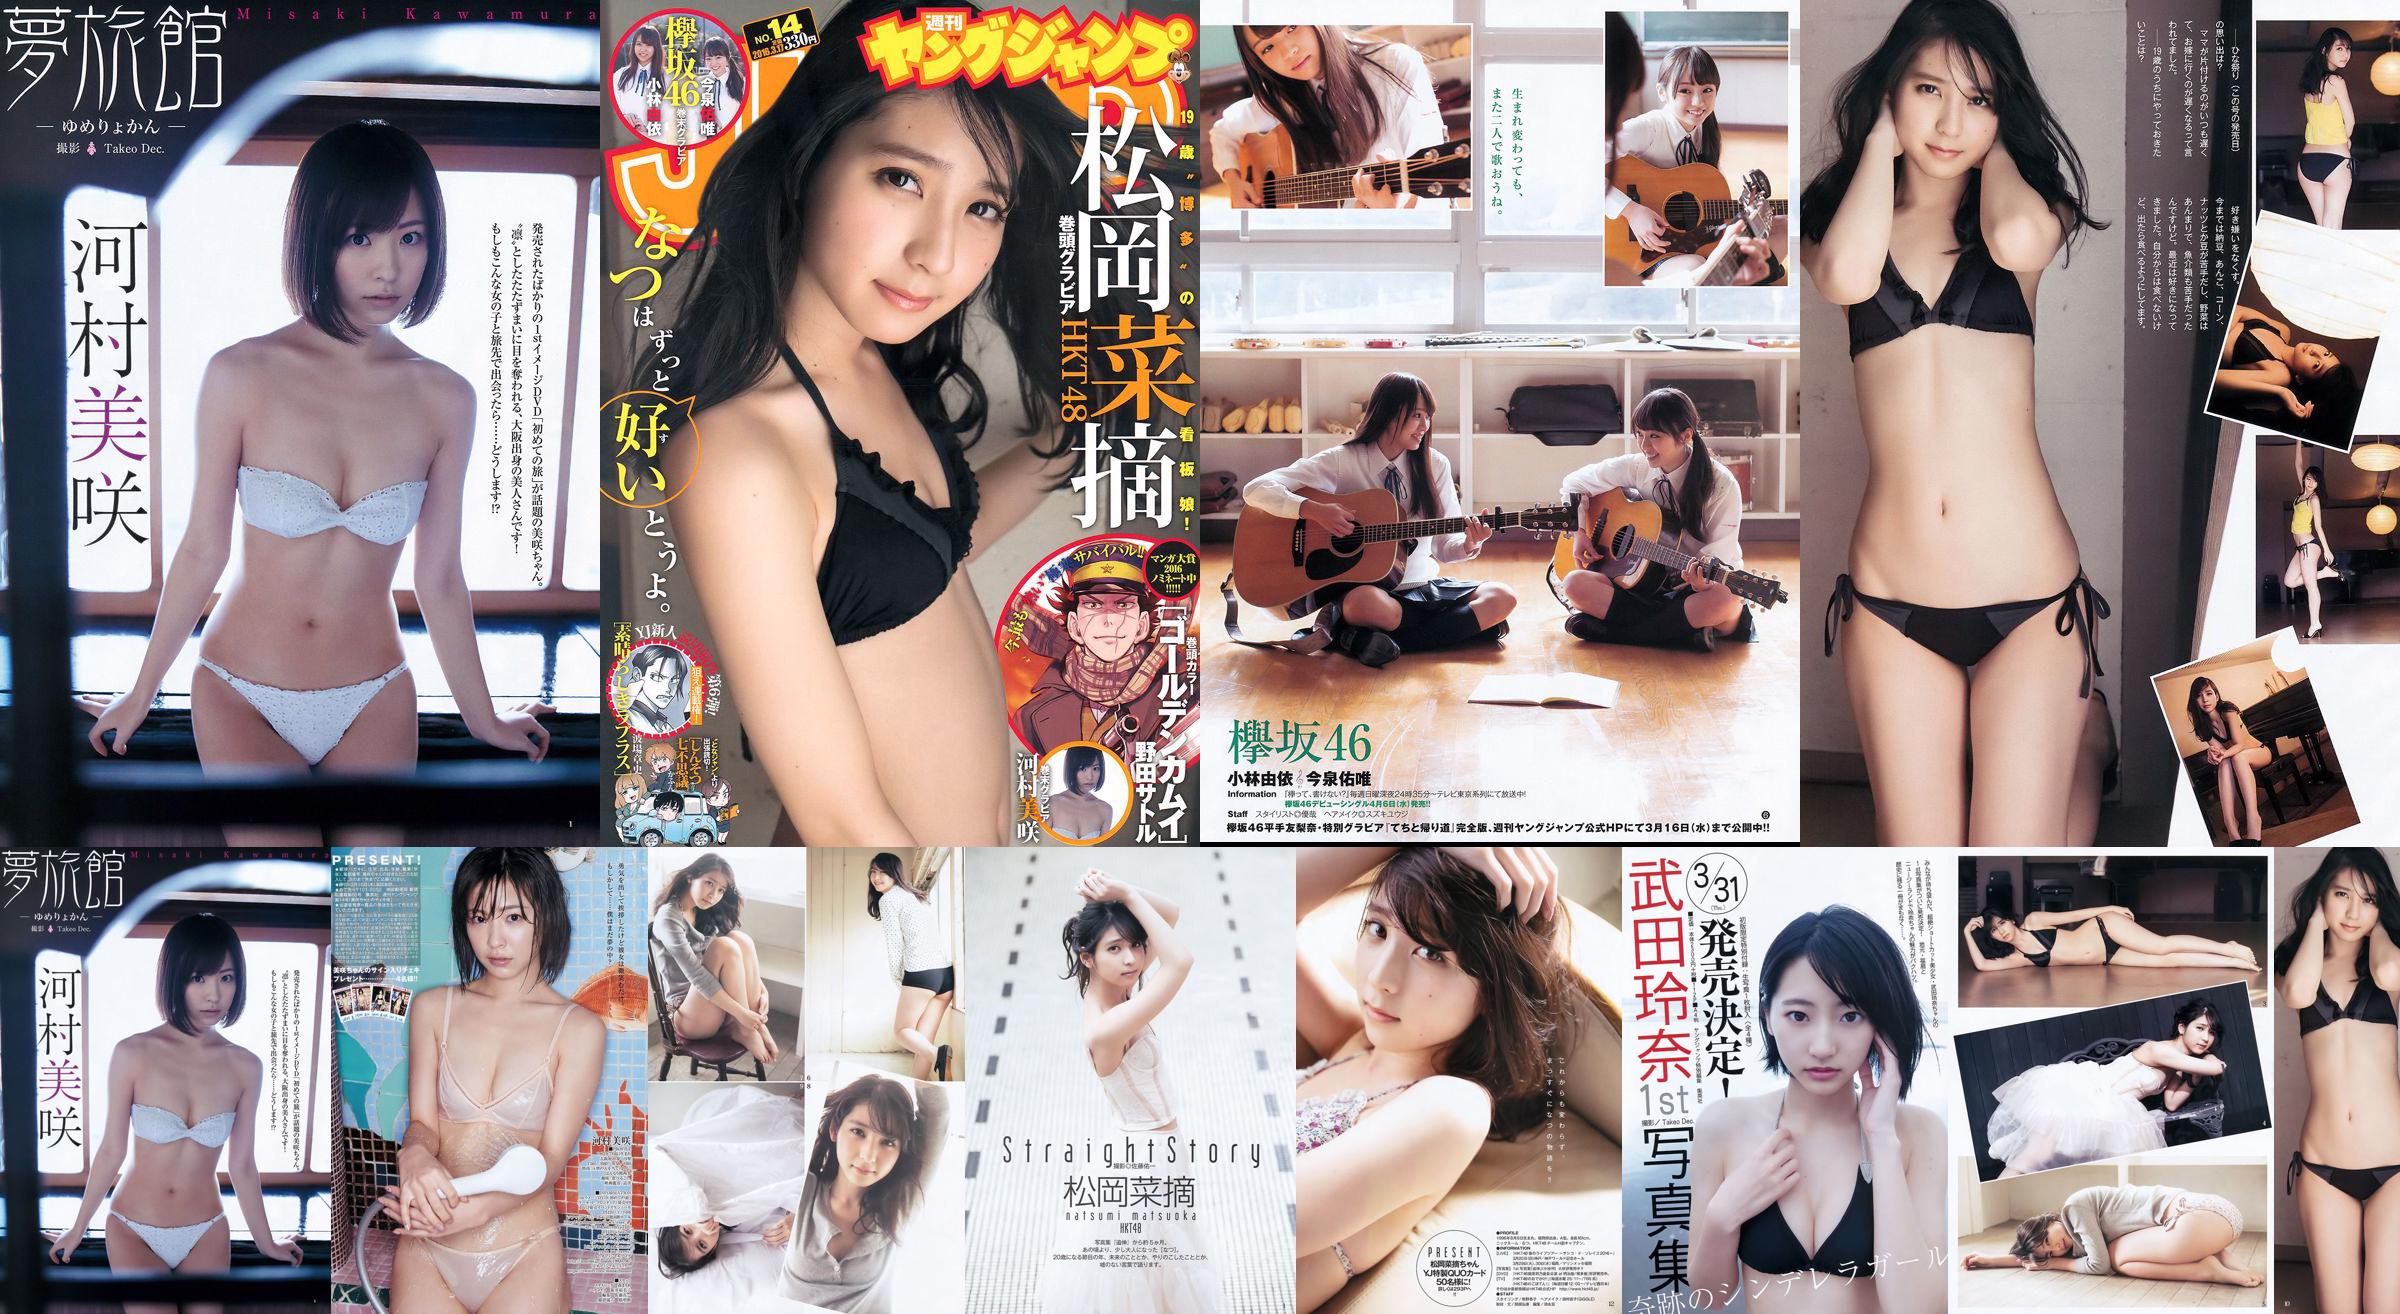 Choix de légumes Muraoka Yui Kobayashi Yui Imaizumi Misaki Kawamura [Weekly Young Jump] Magazine photo n ° 14 2016 No.1ec236 Page 3